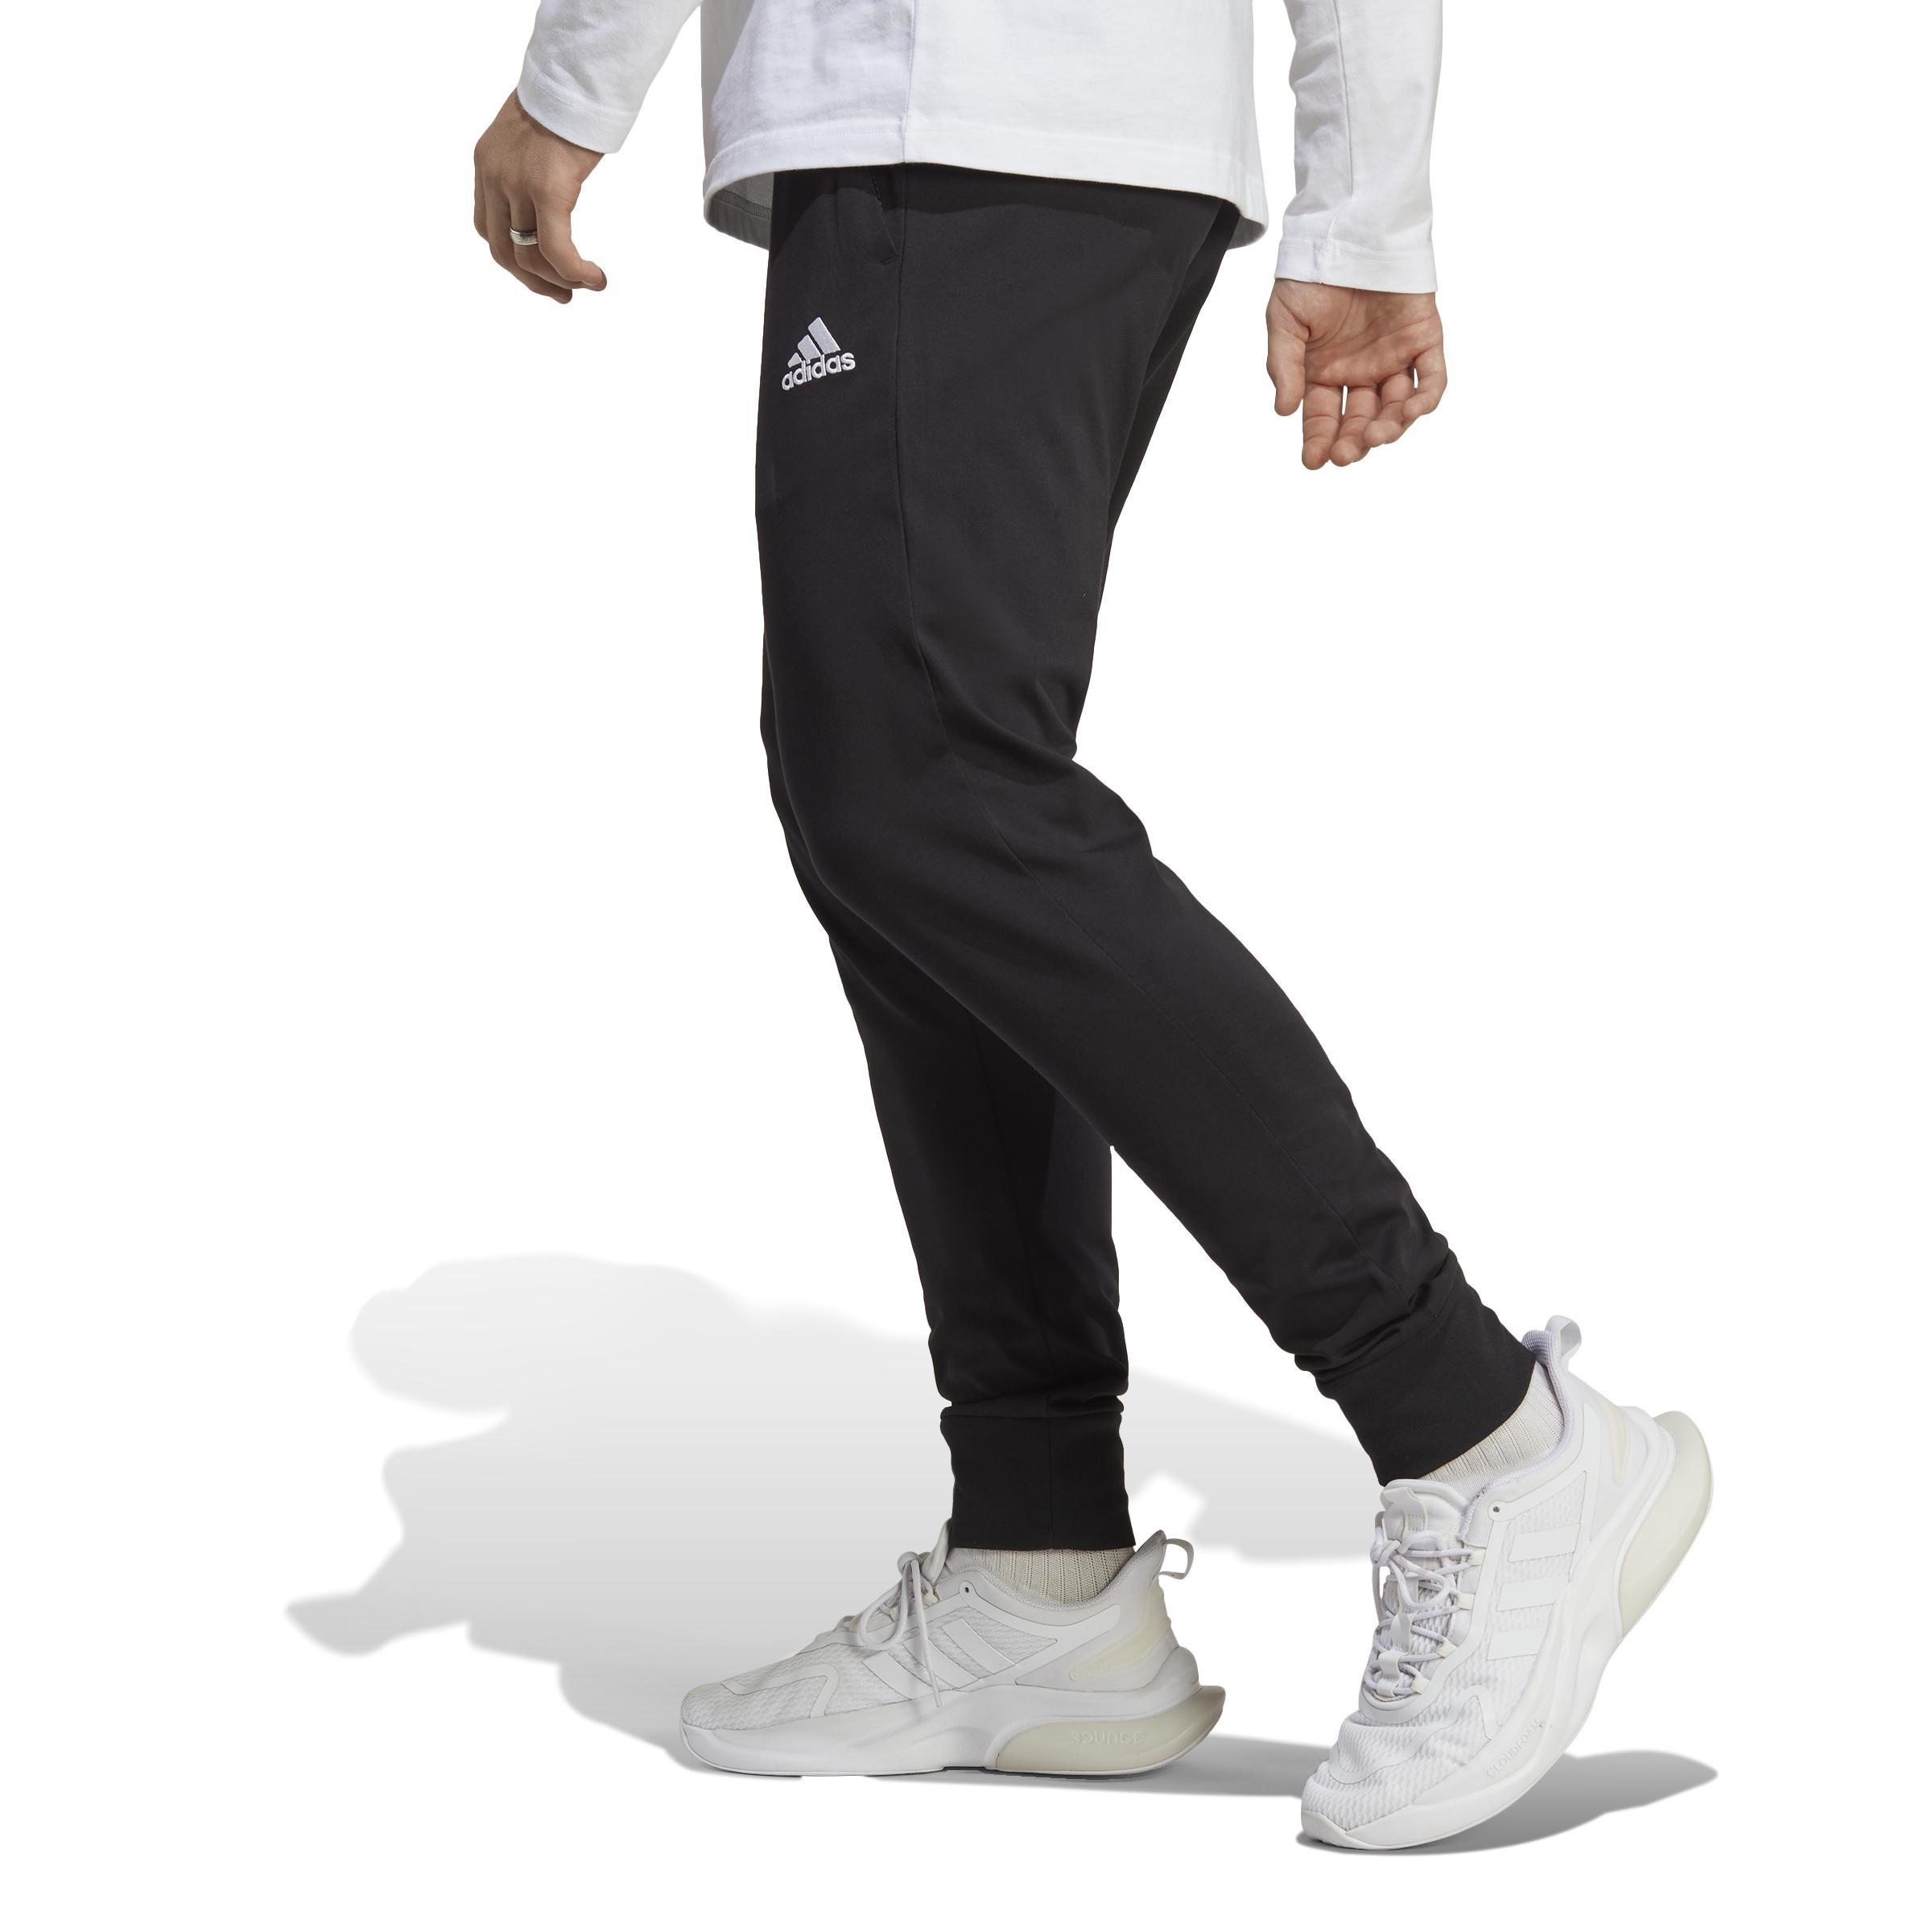 adidas - Men Essentials Single Jersey Tapered Cuff Joggers, Black